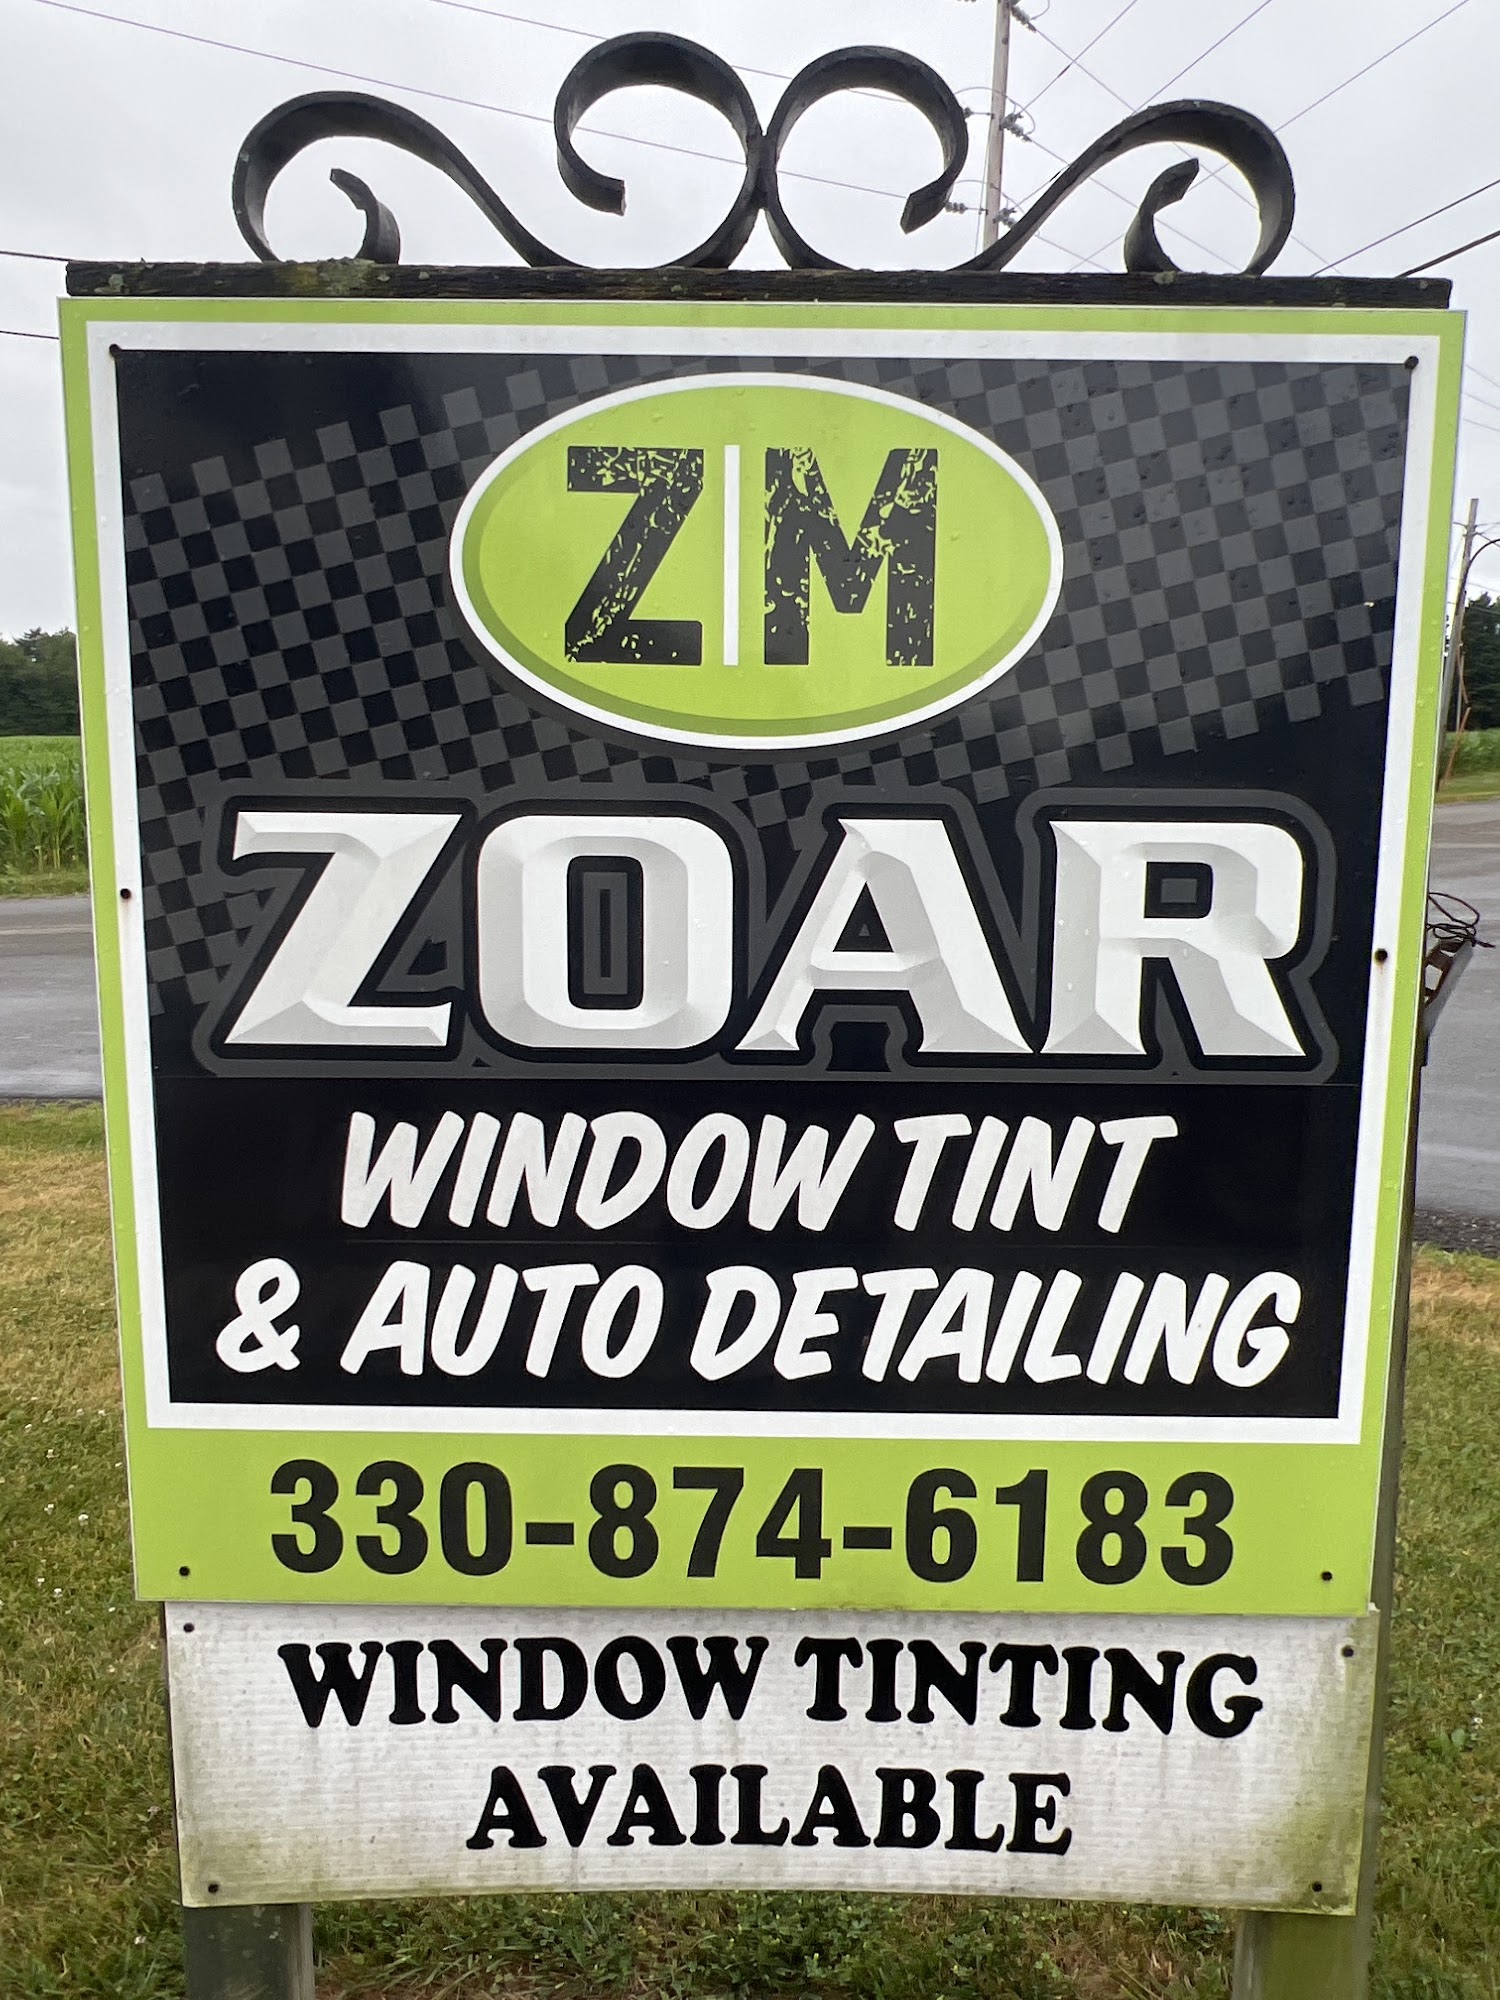 Zoar Auto Detailing & Window Tint OH-212, Bolivar Ohio 44612